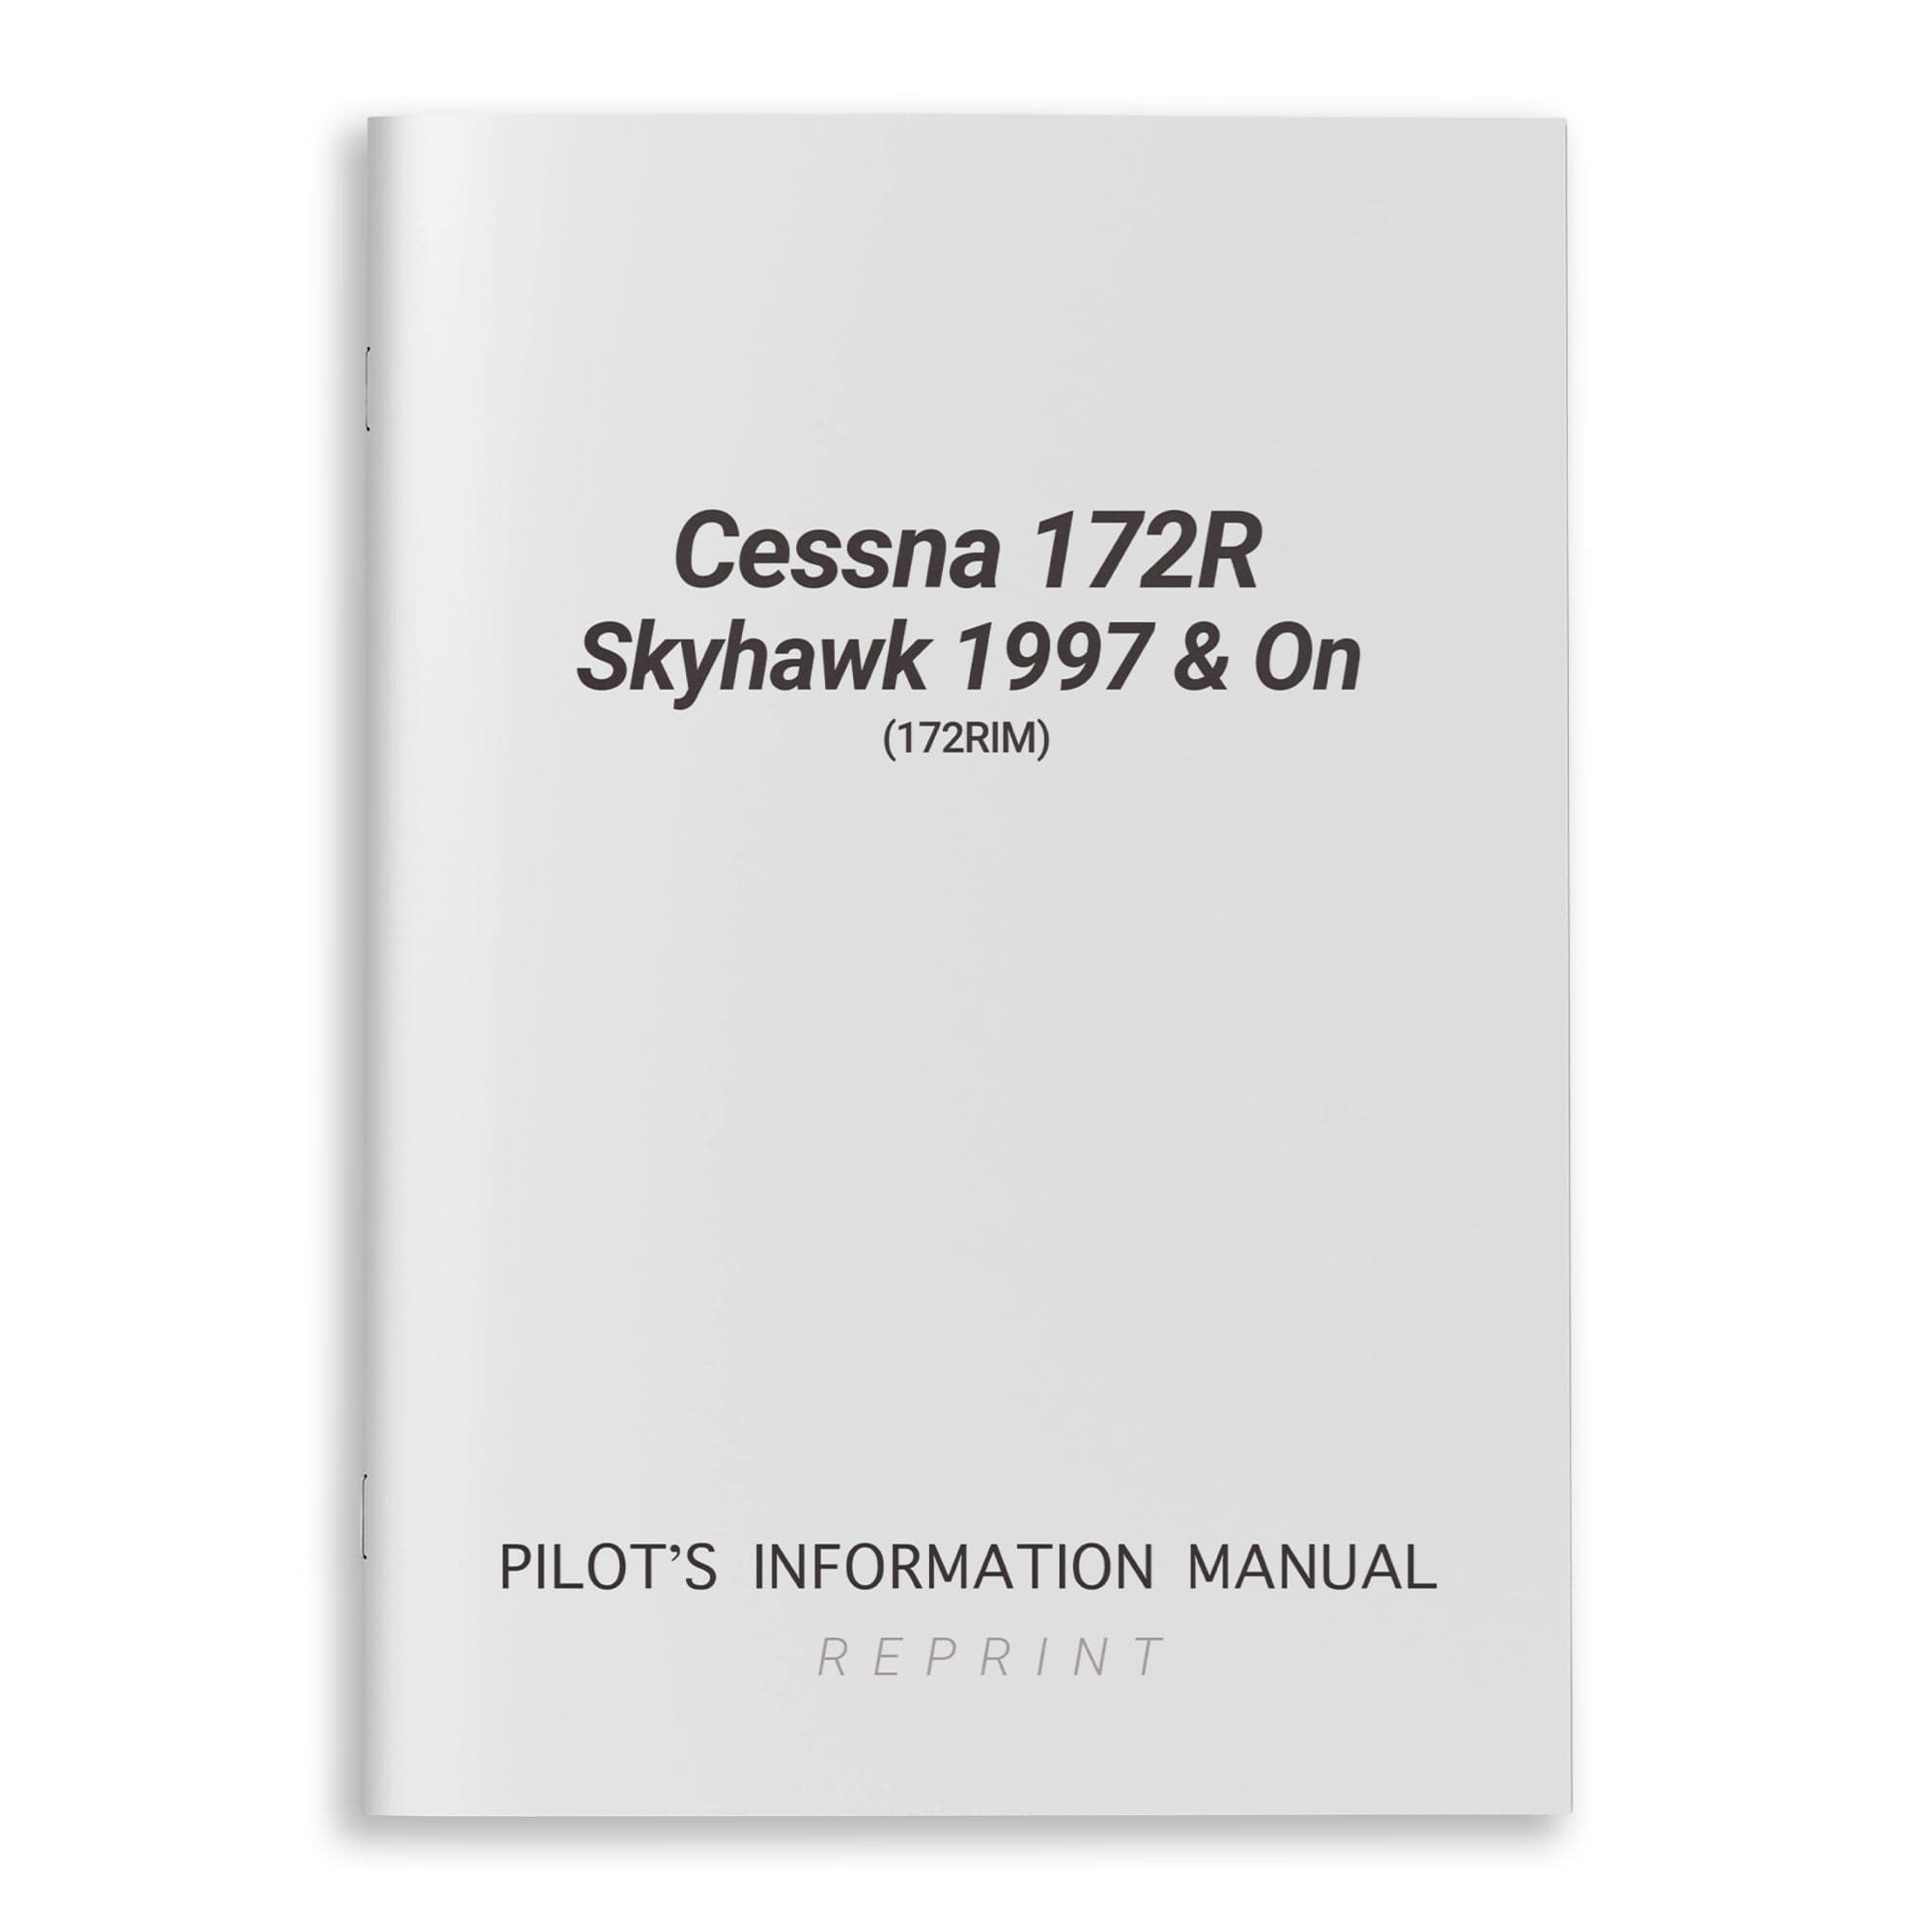 Cessna 172R Skyhawk 1997 & On Pilot's Information Manual (172RIM) - PilotMall.com